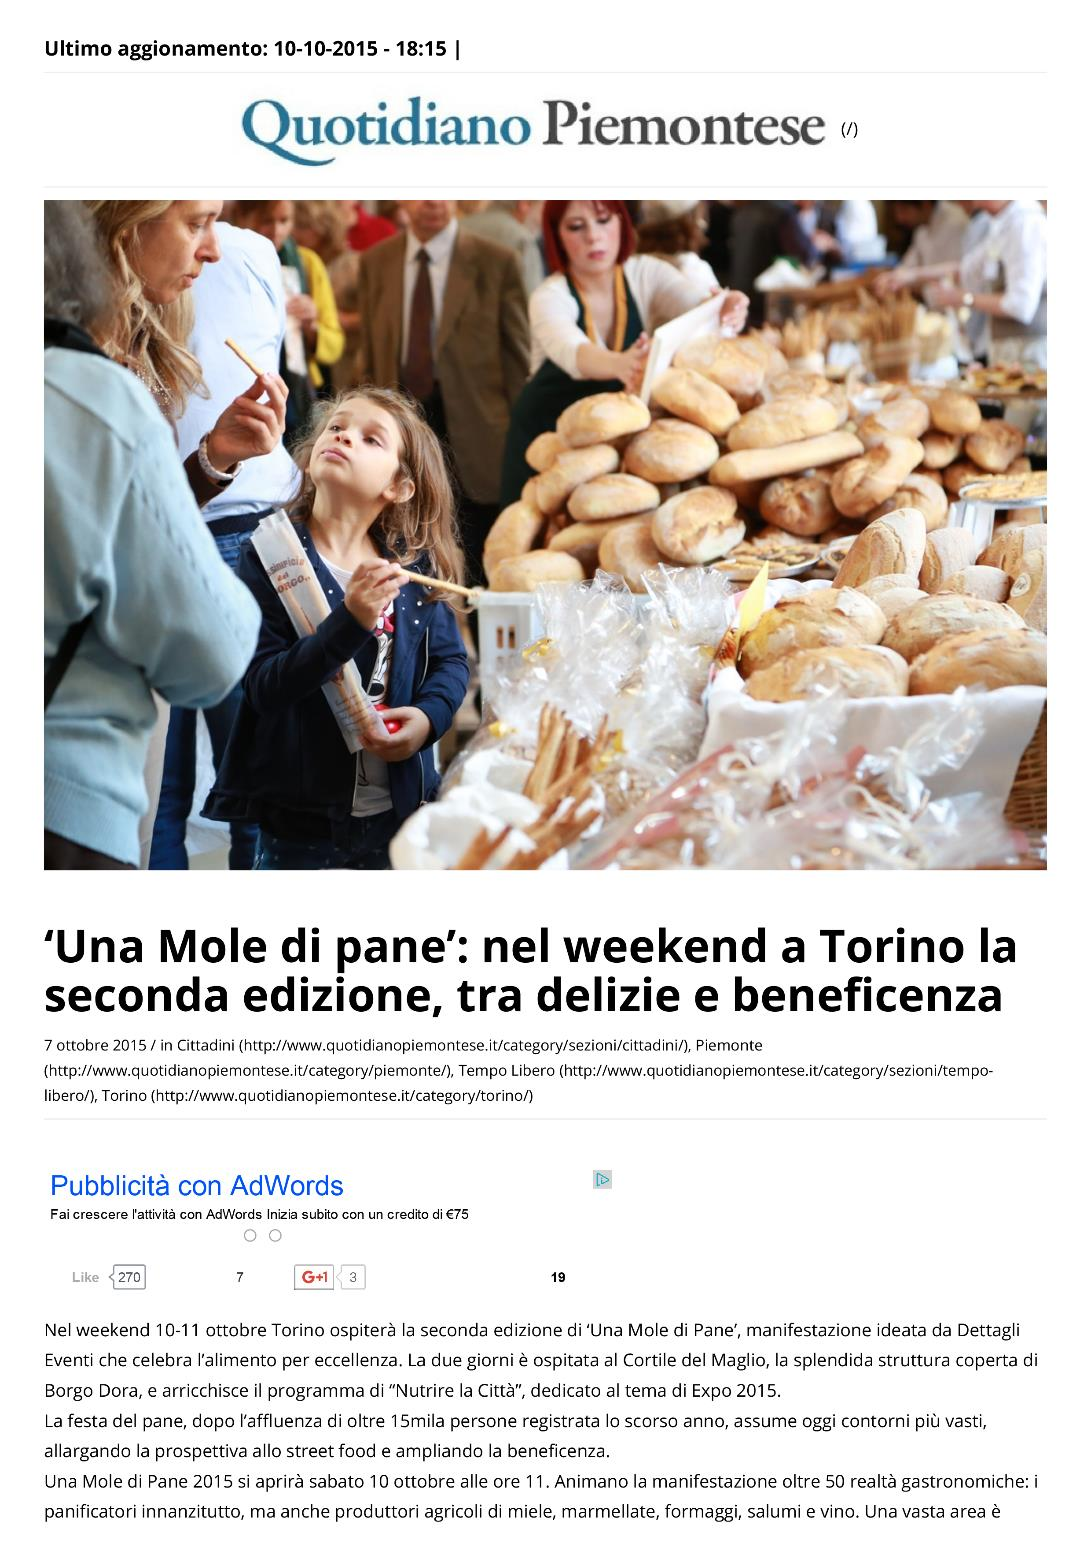 Quotidiano Piemontese Una Mole di pane _ nel weekend a